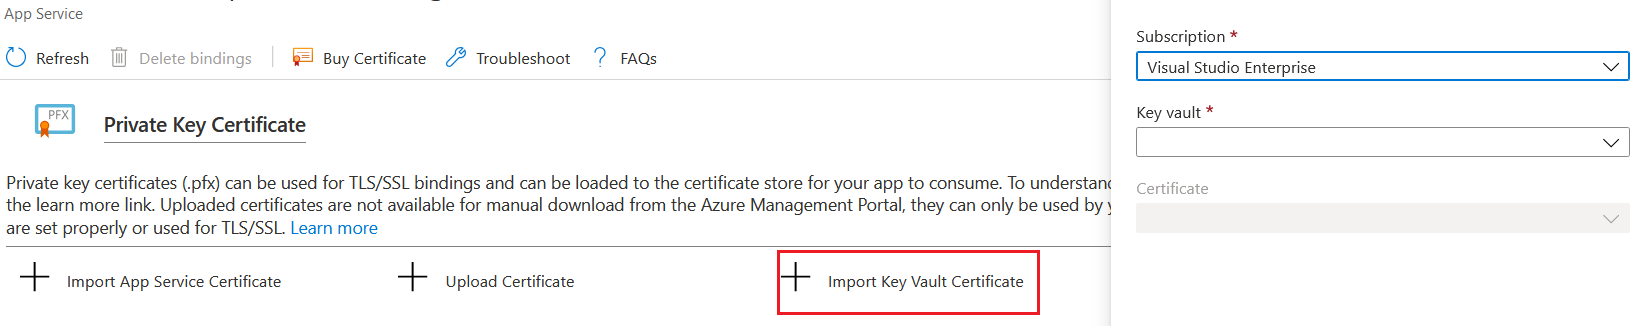 Import Key Vault Certificate